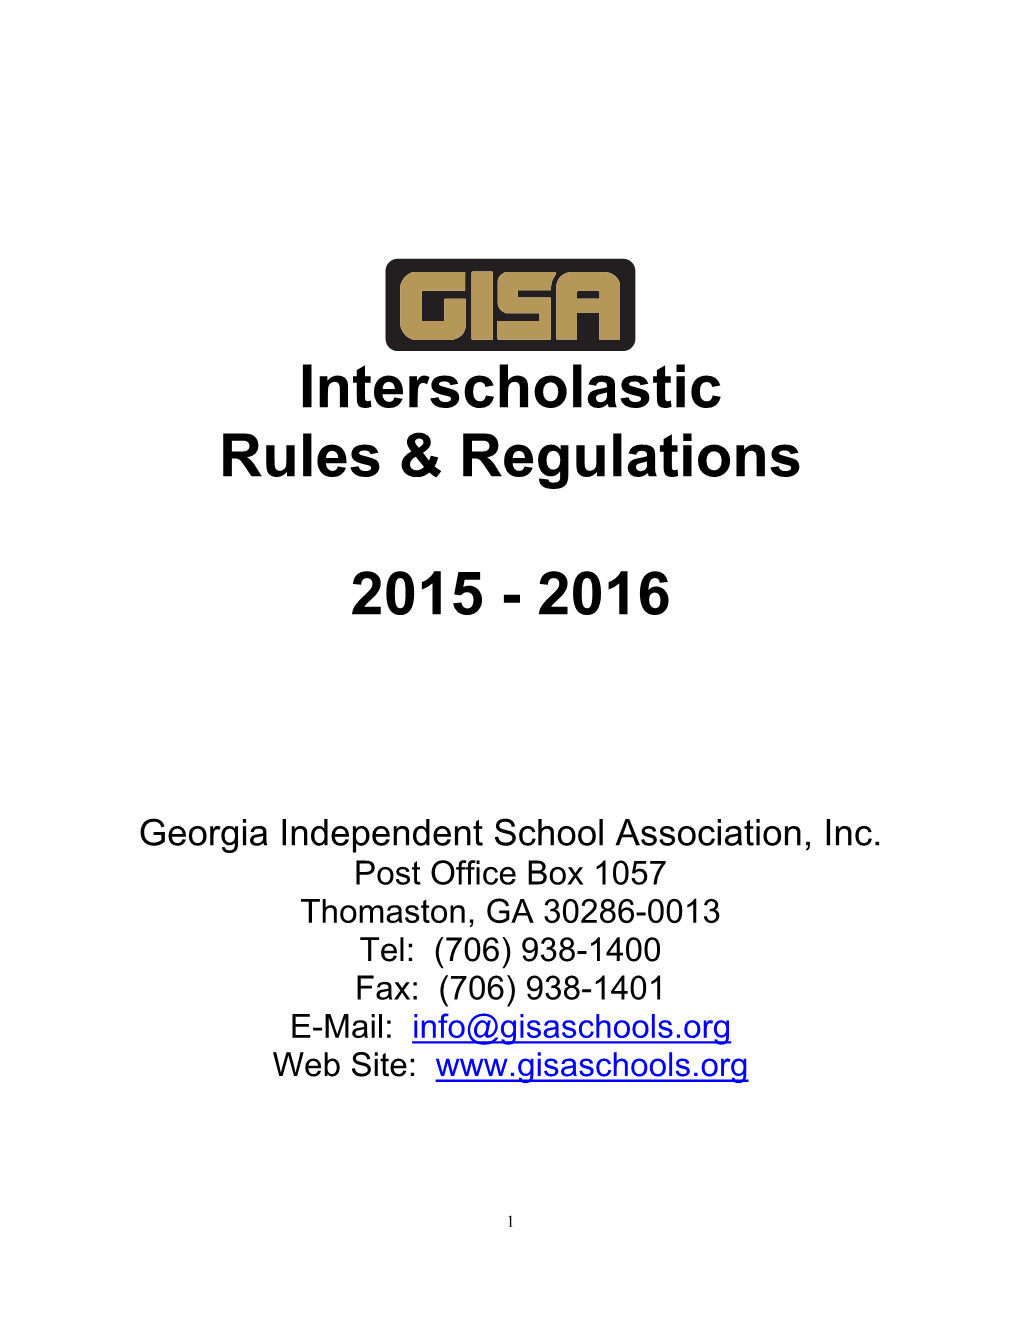 Interscholastic Rules & Regulations 2015